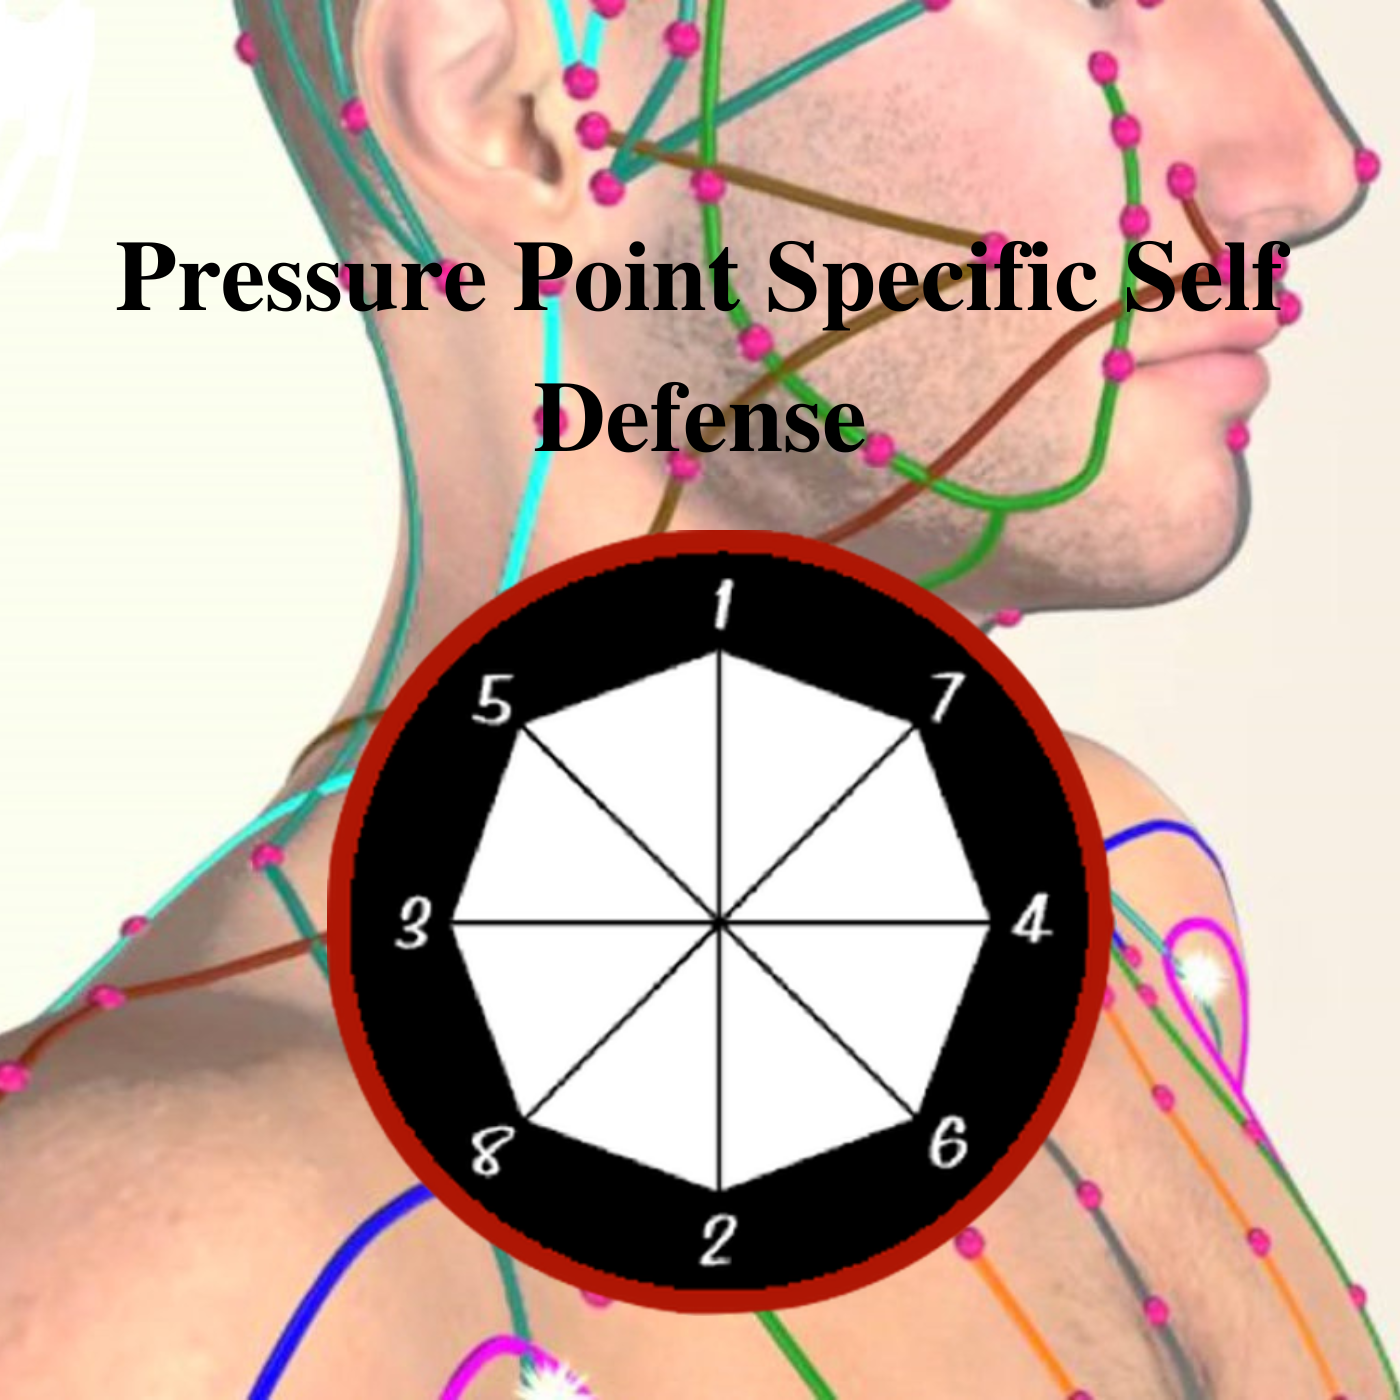 * Pressure Point Specific Self Defense